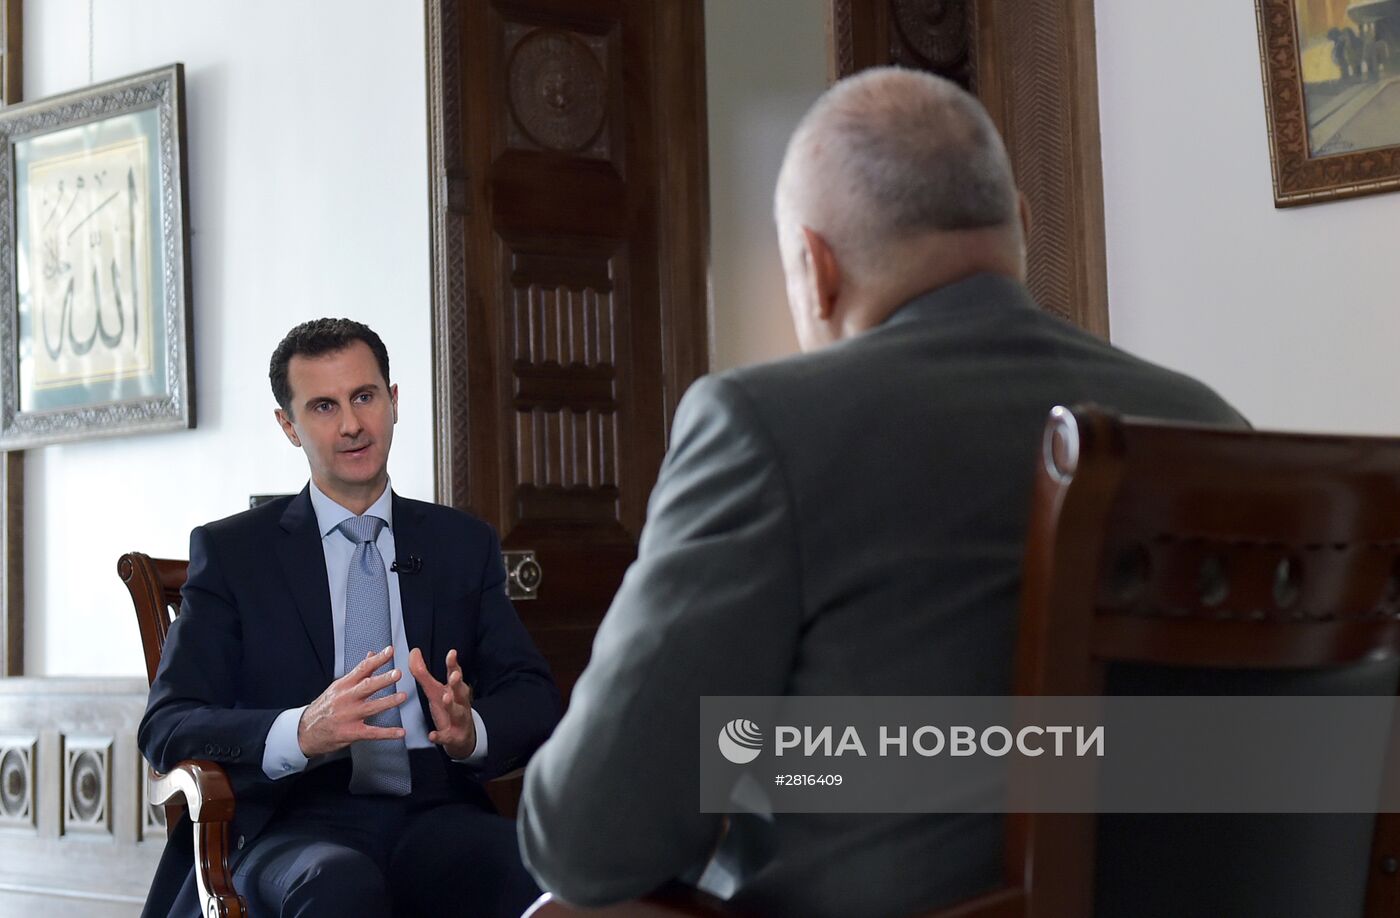 Интервью президента Сирии Б. Асада гендиректору МИА "Россия сегодня" Д. Киселеву